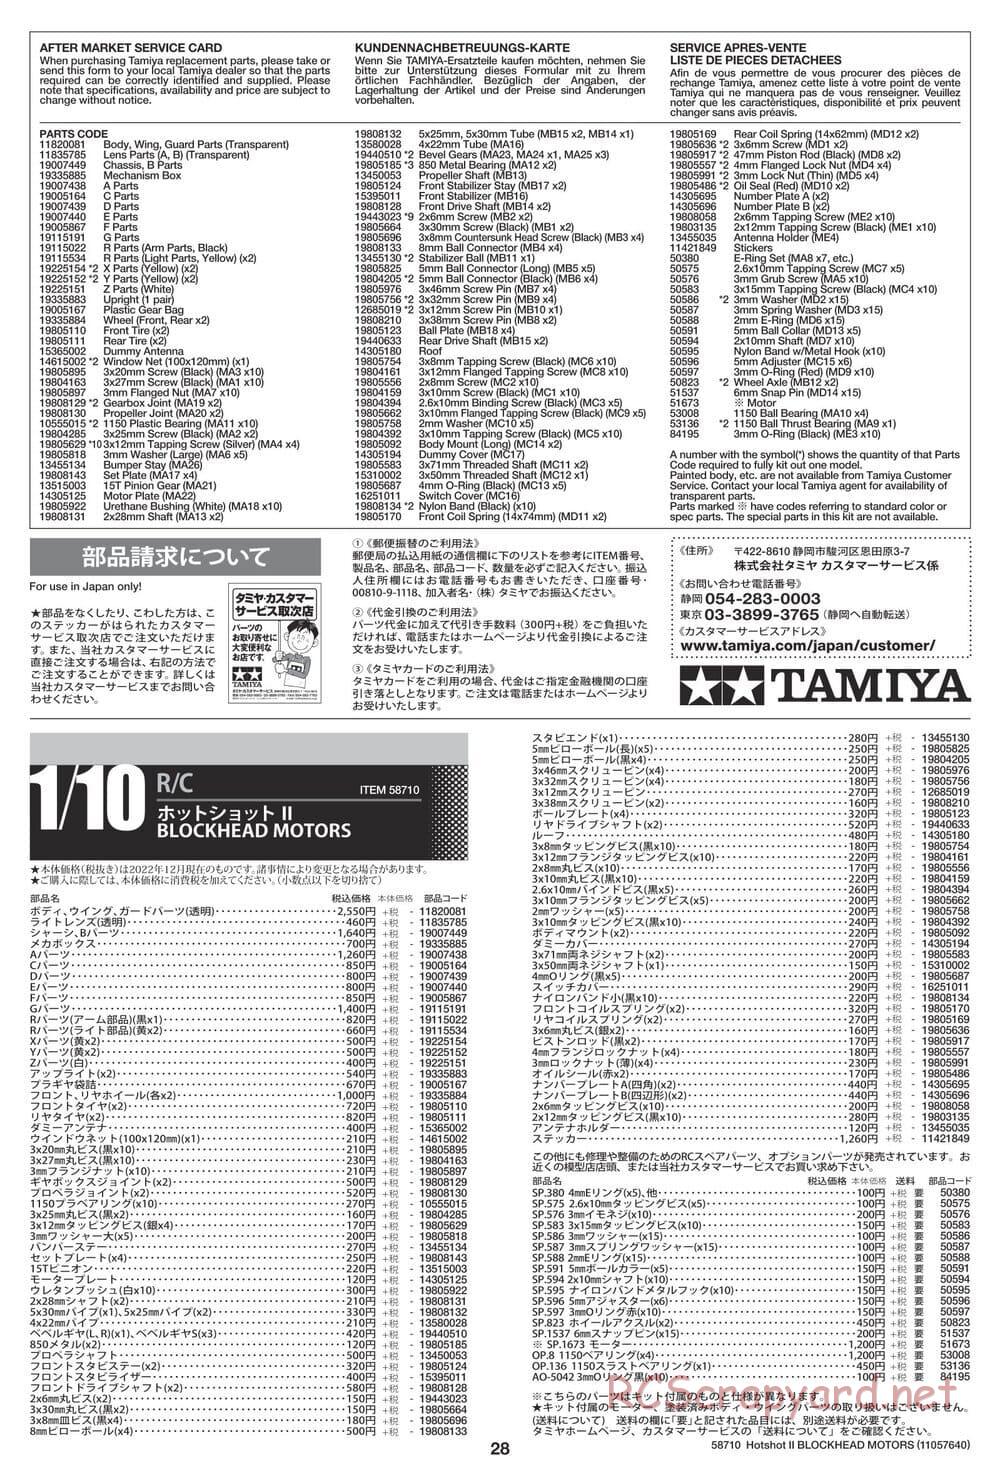 Tamiya - Hotshot II Blockhead Motors - HS Chassis - Manual - Page 28